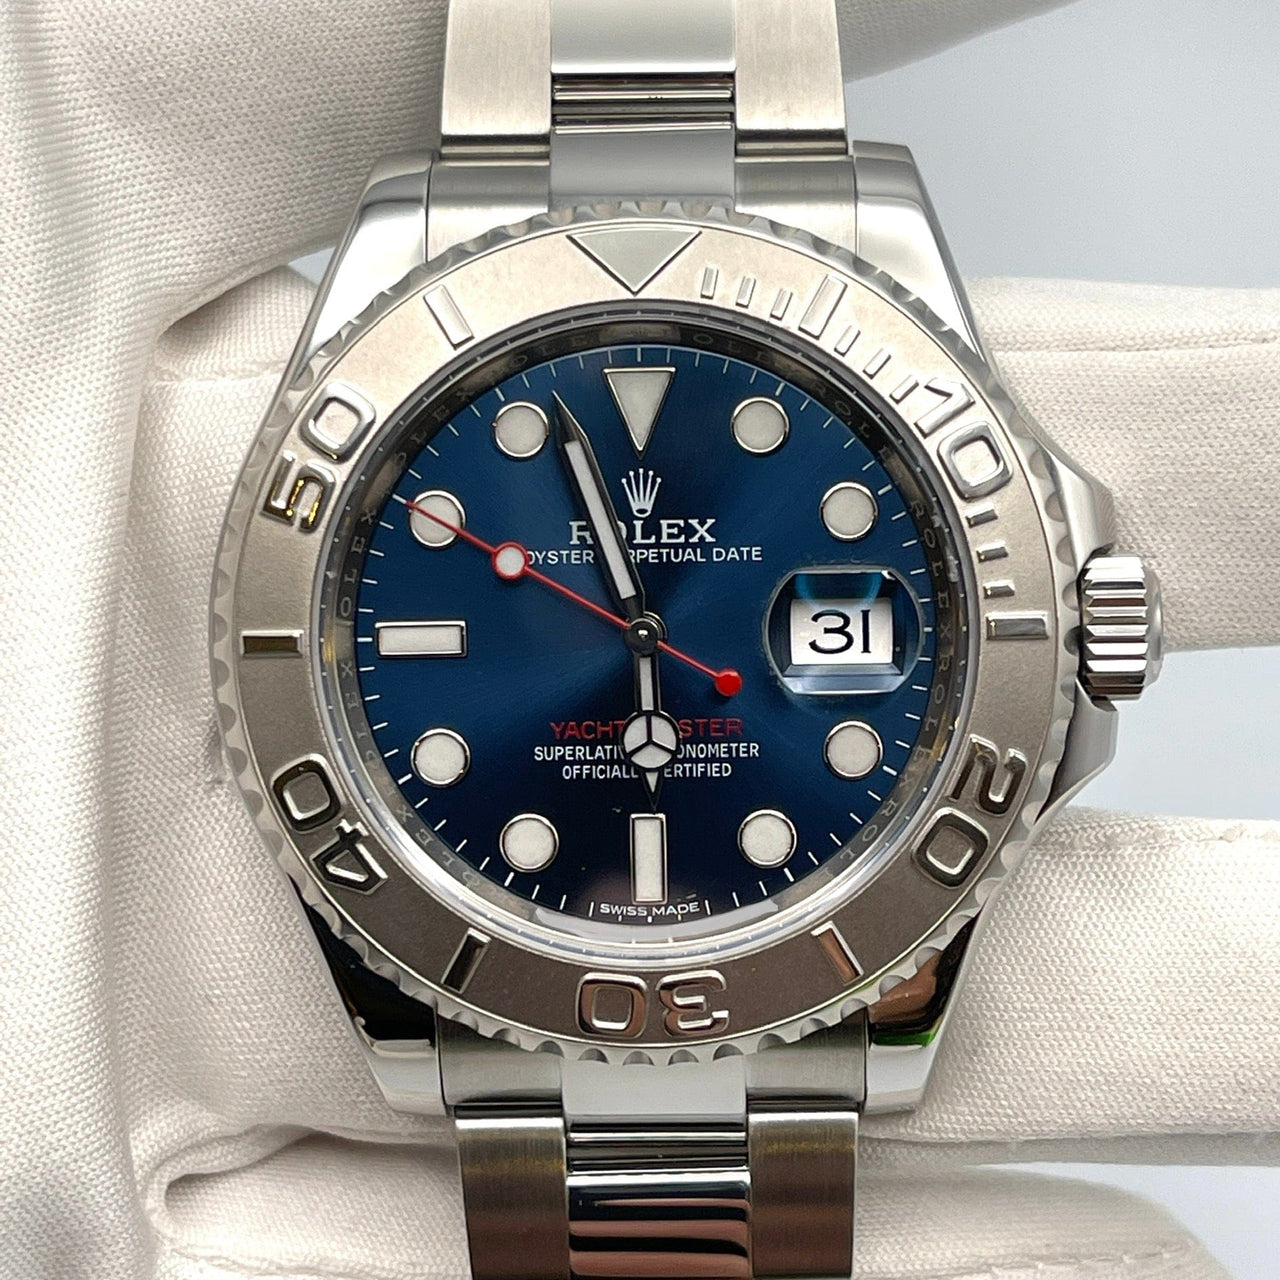 Rolex Yacht-Master Stainless Steel Platinum Blue Dial 116622 wrist aficionado